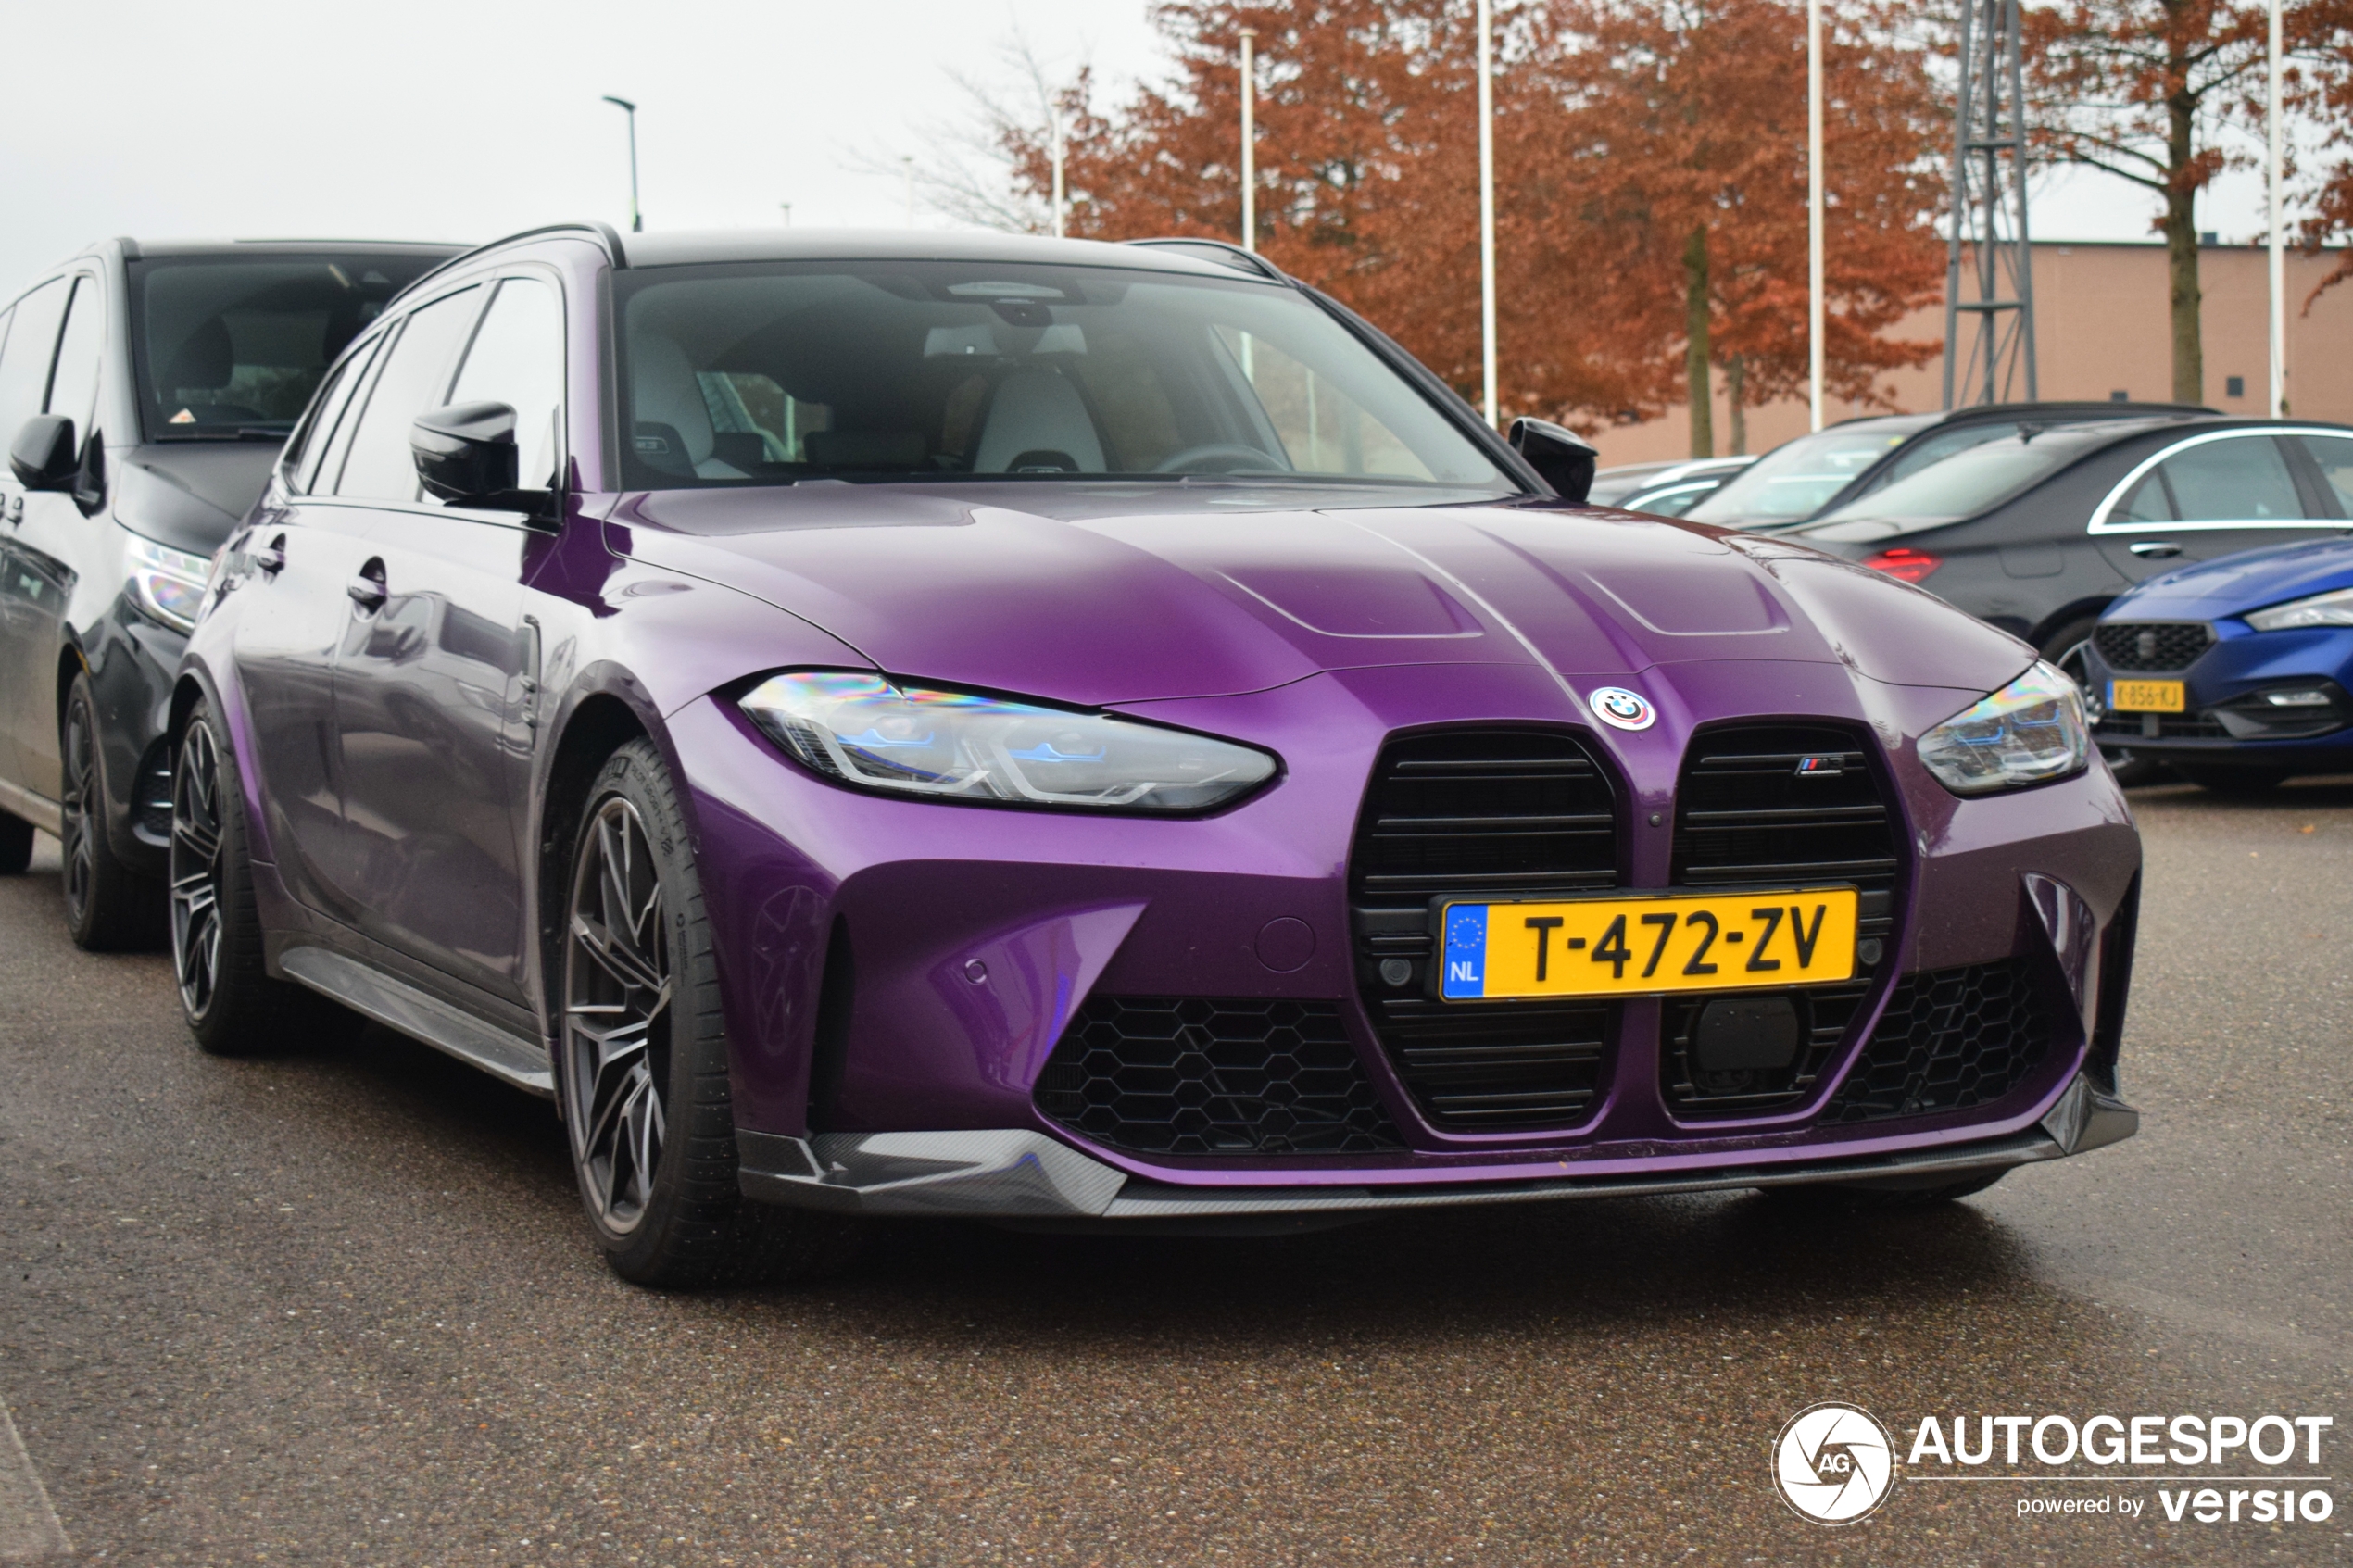 A stunning violet M3 Touring shows up in Gorinchem